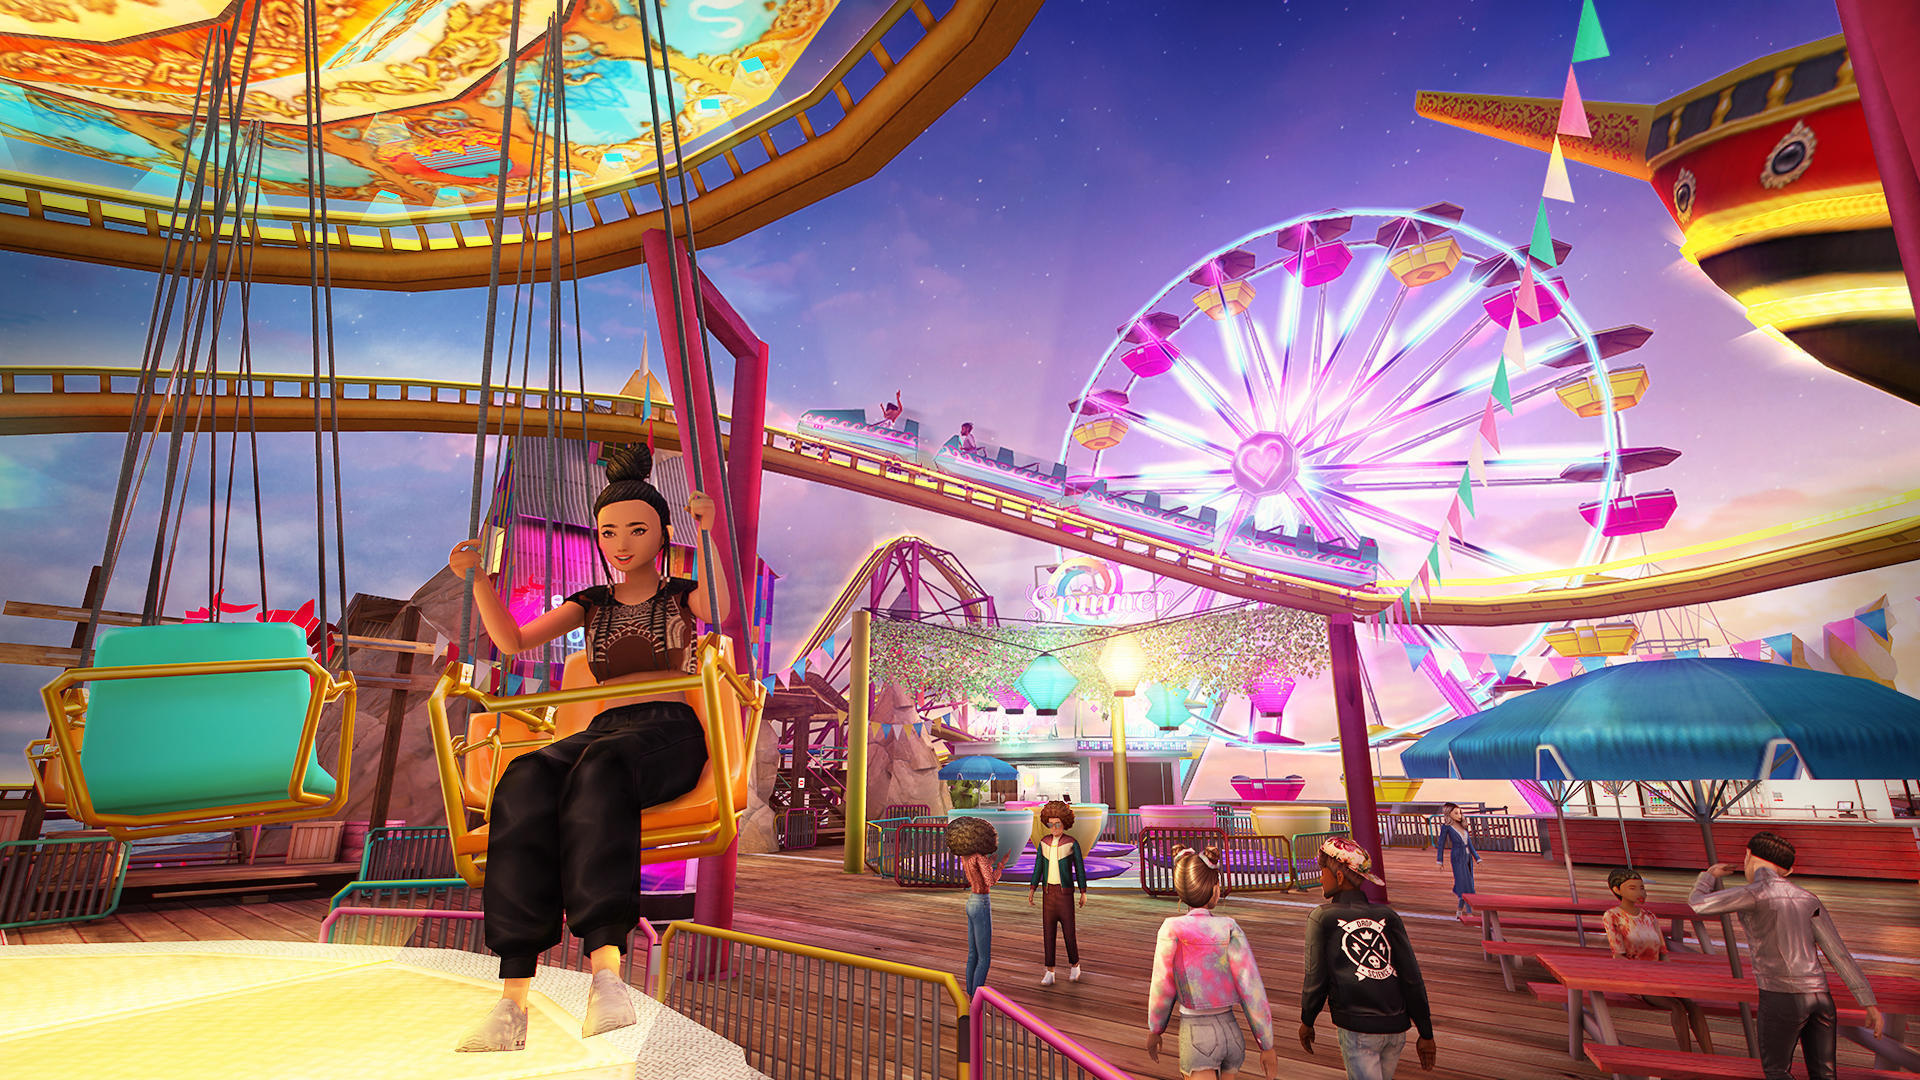 Amusement park. Colourful illustration by Coolarts223 on DeviantArt